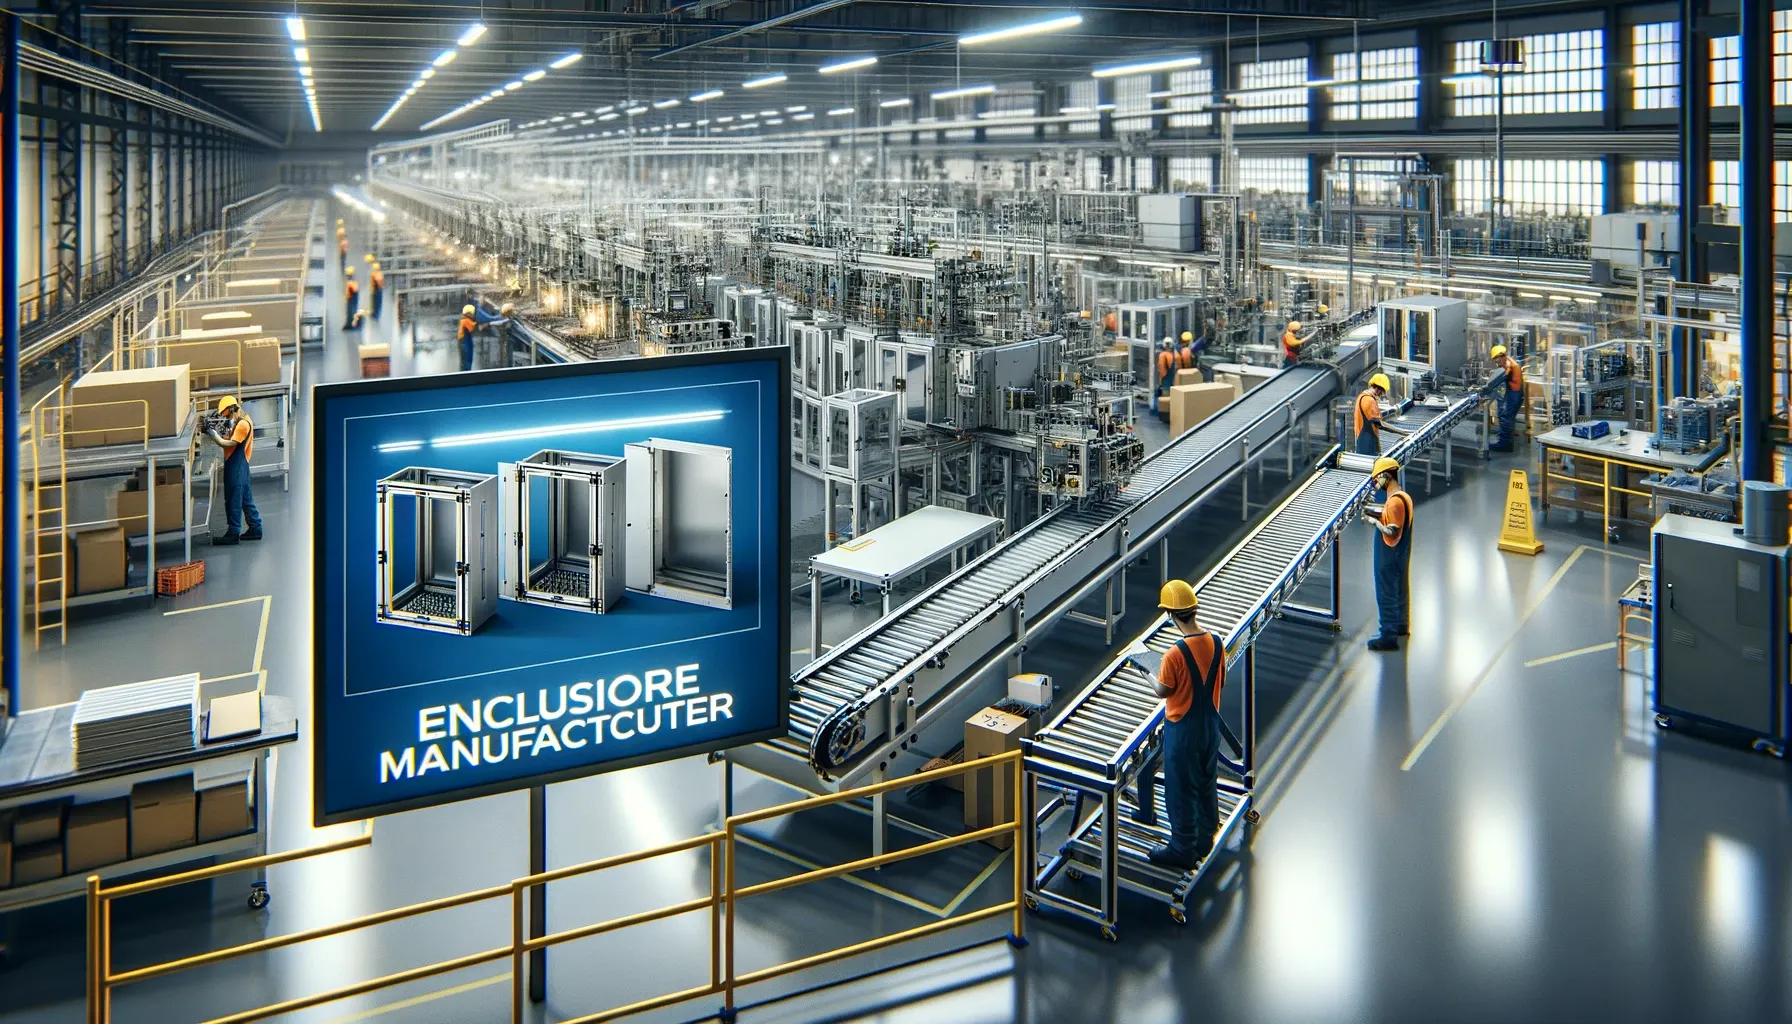 Enclosure Manufacturer